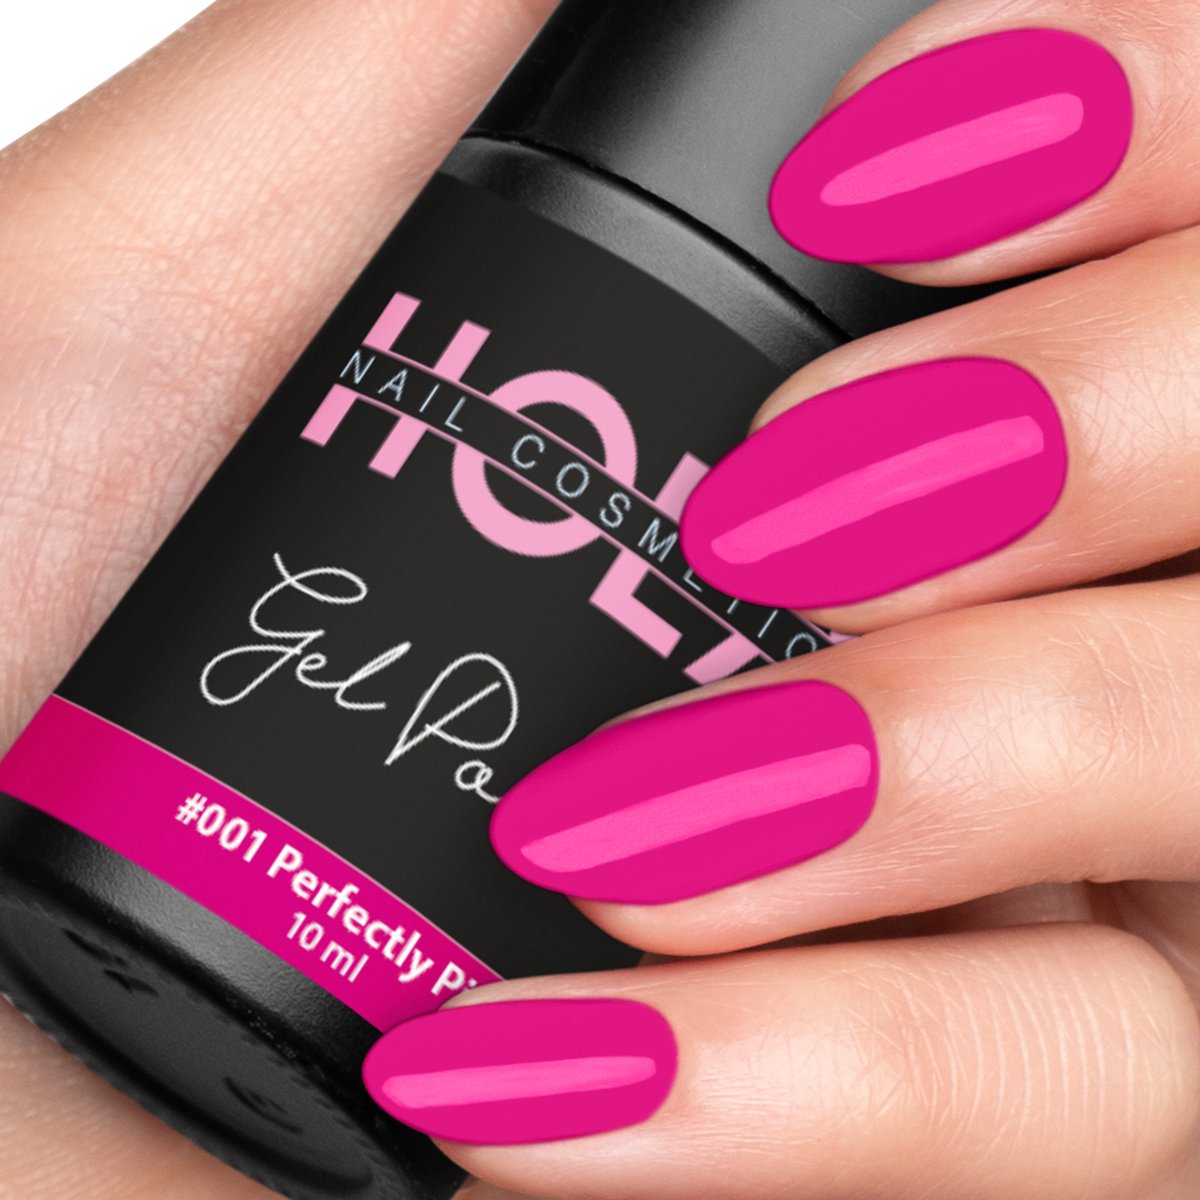 Hola Nail Cosmetica Gelpolish #001 Perfectly Pink (10ml)